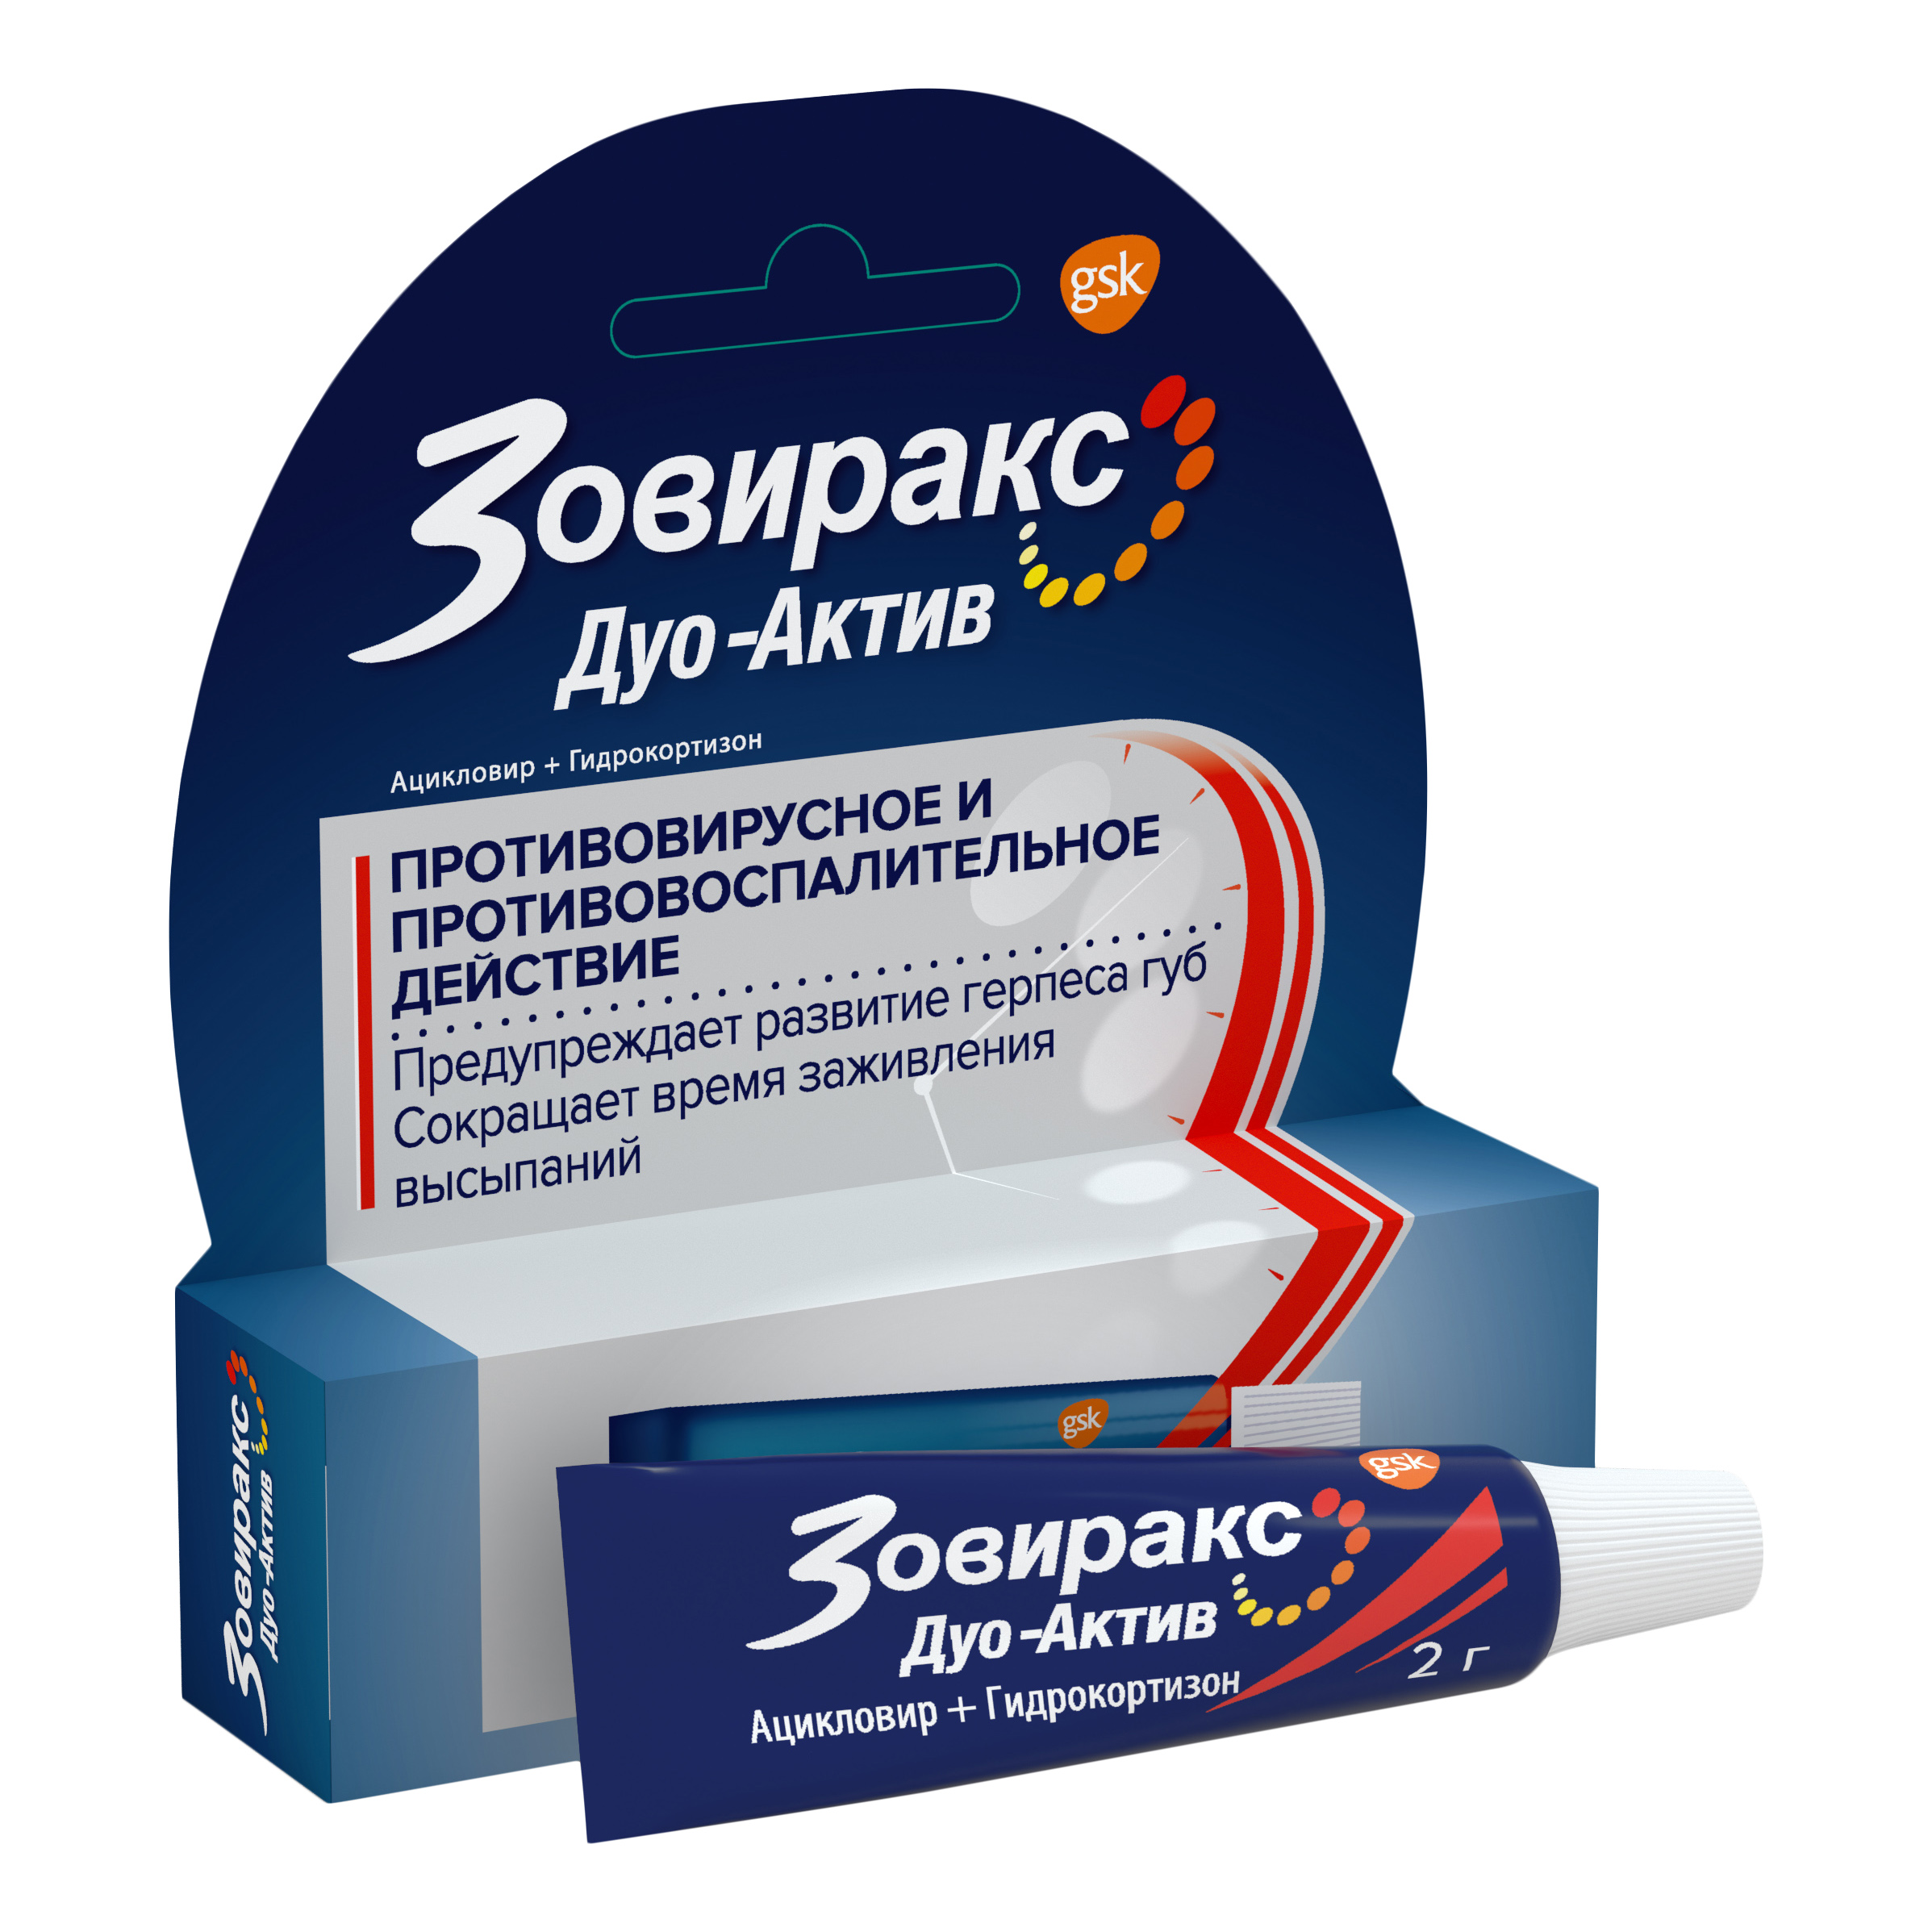 Зовиракс ДУО-АКТИВ крем от простуды на губах, противовирусное средство, ацикловир+гидрокортизон, 2 г ацикловир сандоз крем 5% 5 г